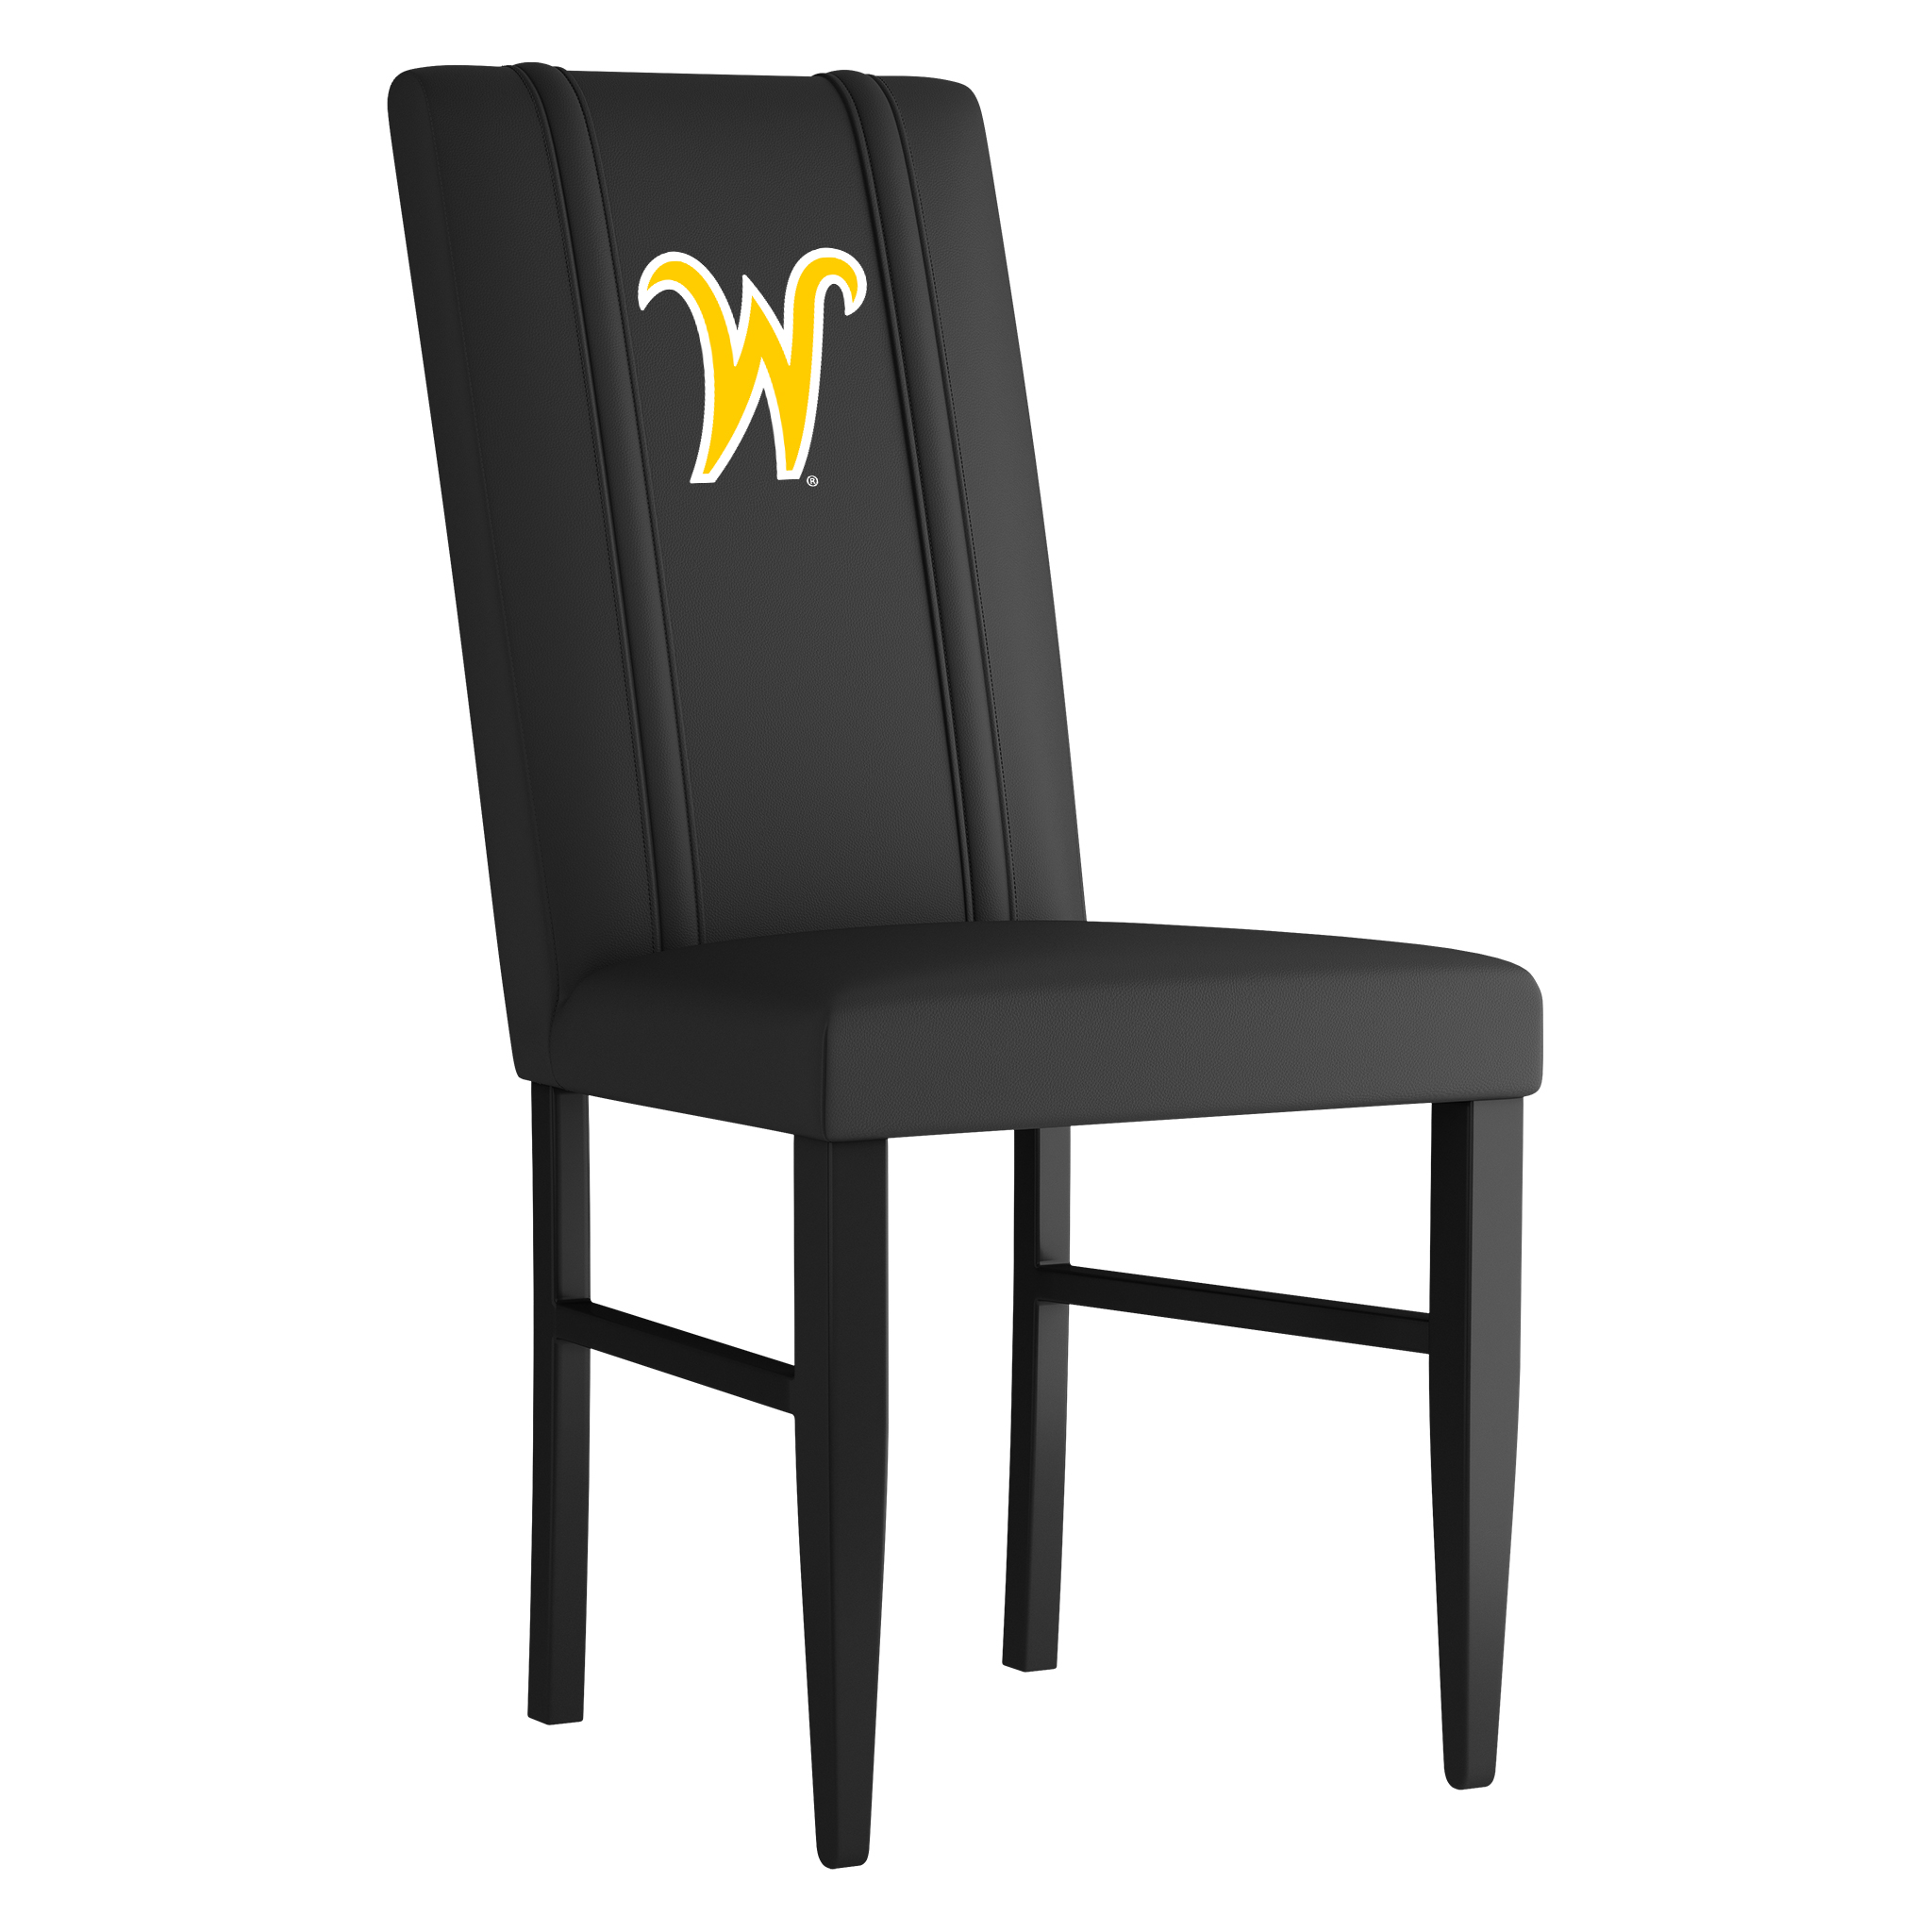 Wichita State Side Chair 2000 With Wichita State Secondary Logo